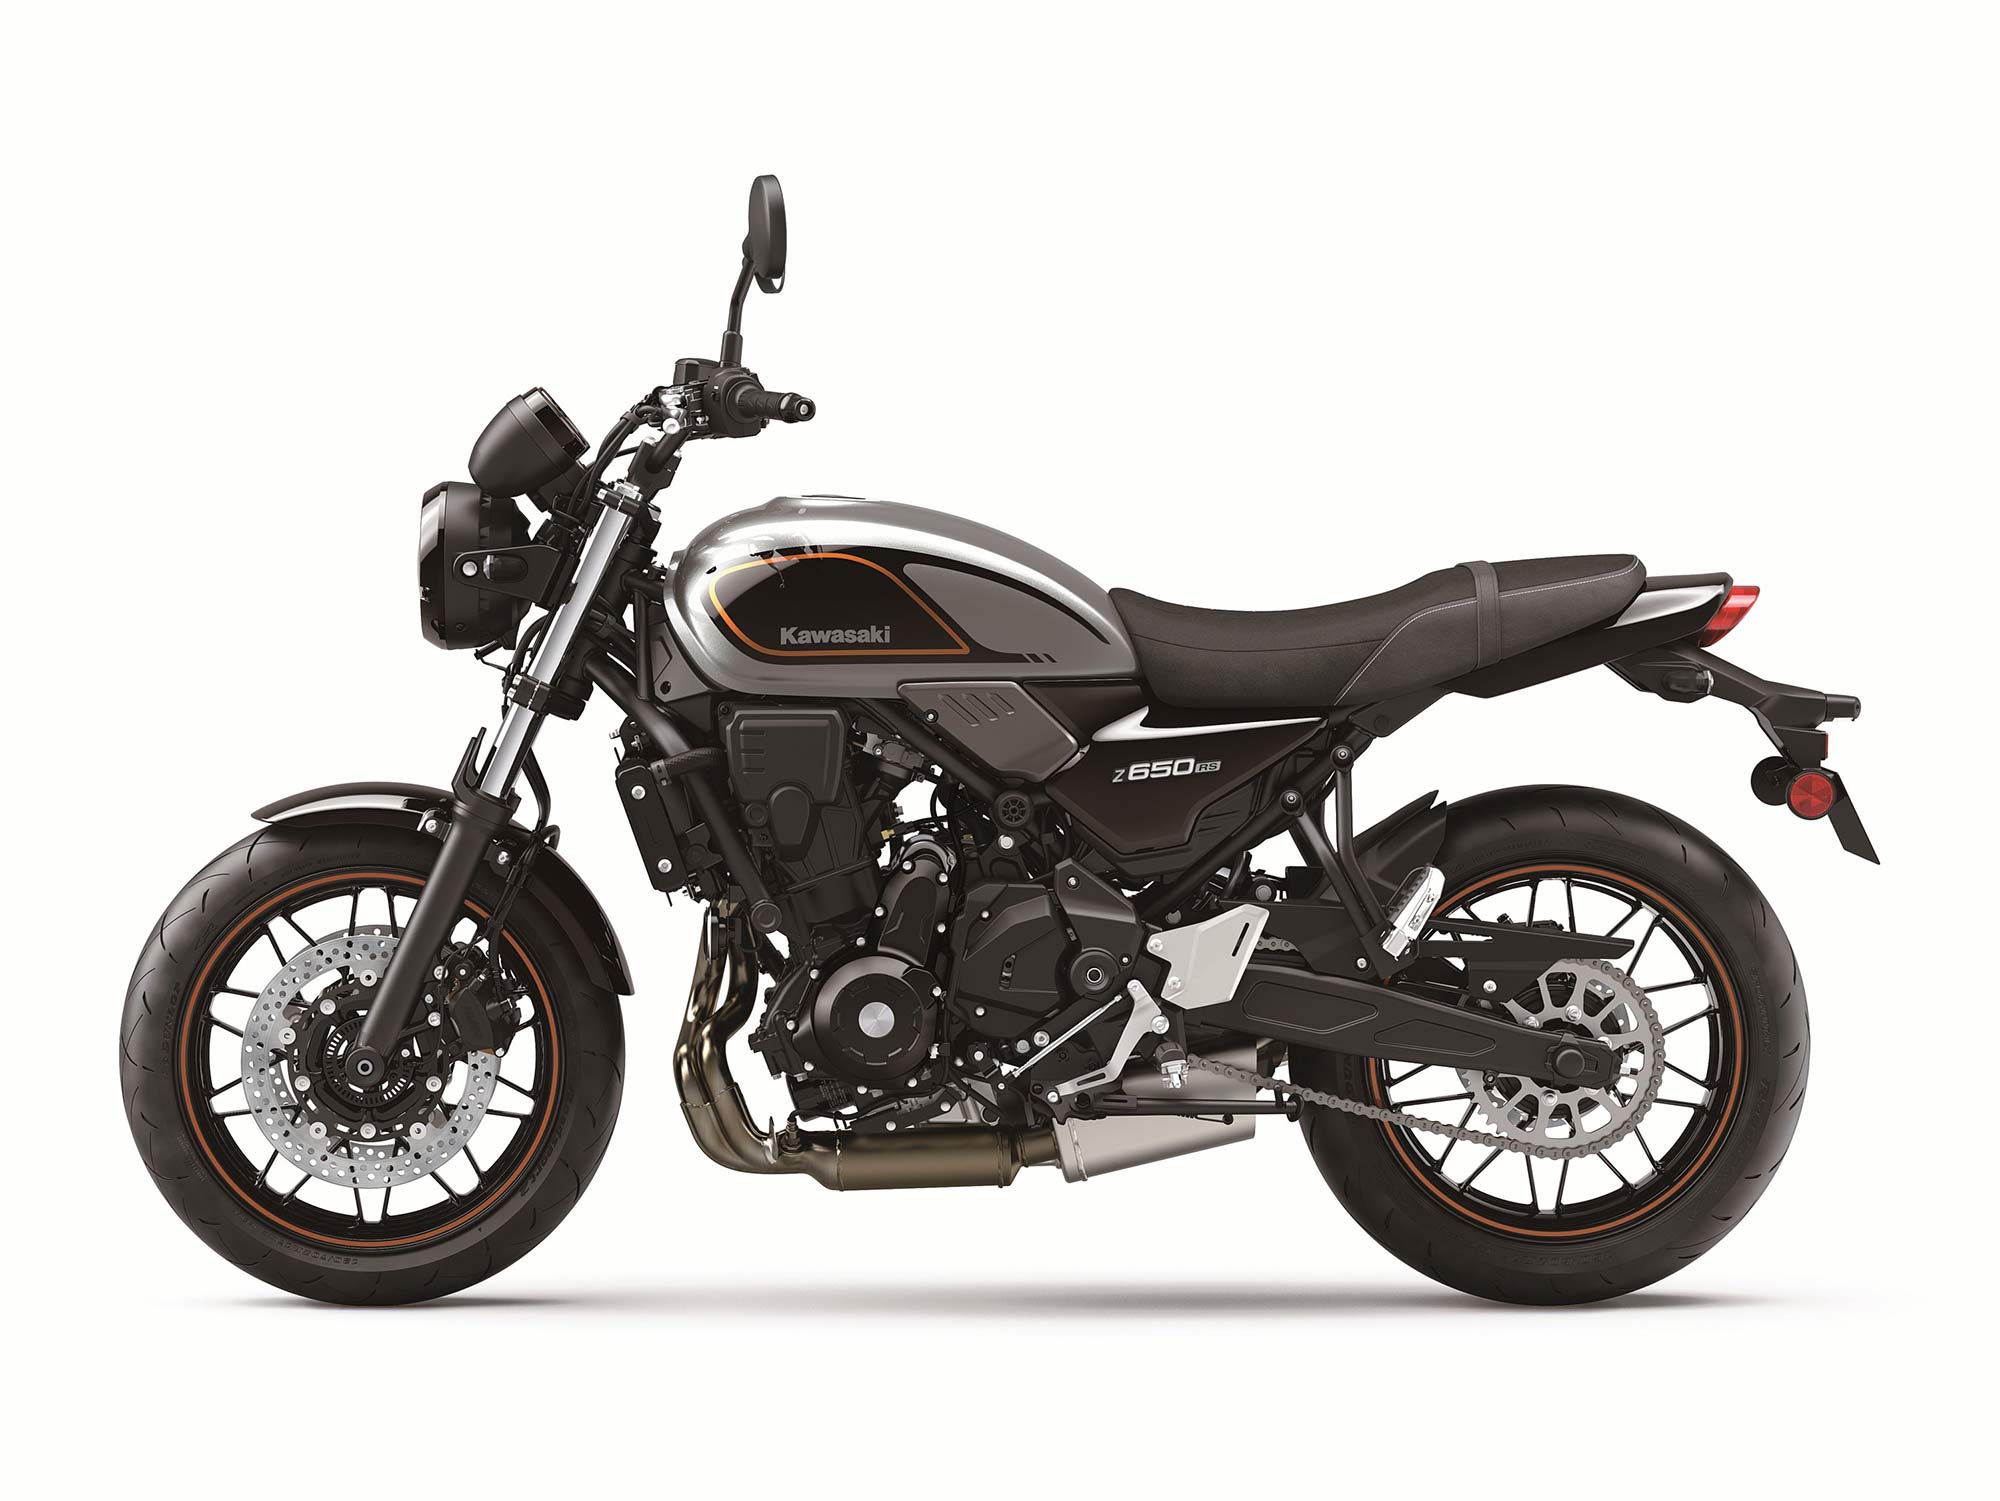 Kawasaki Z650: The agile naked bike with an eye-catching design